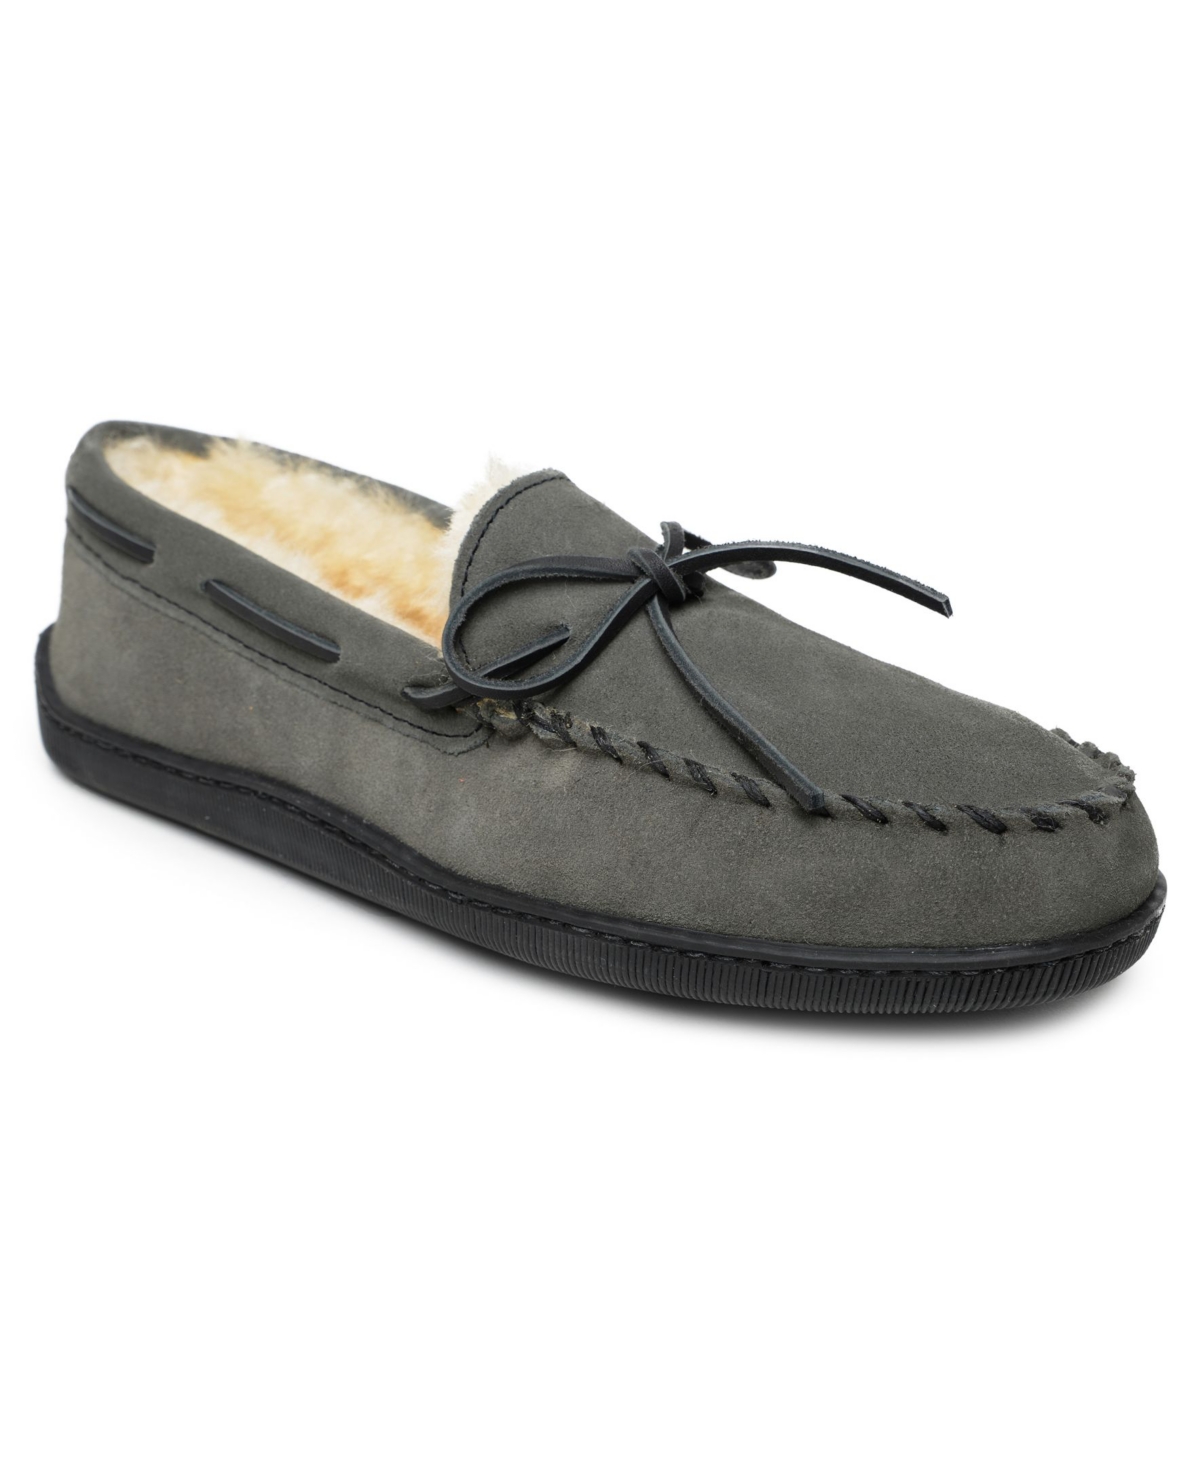 Men's Sheepskin Hardsole Moccasin Slippers - Gray